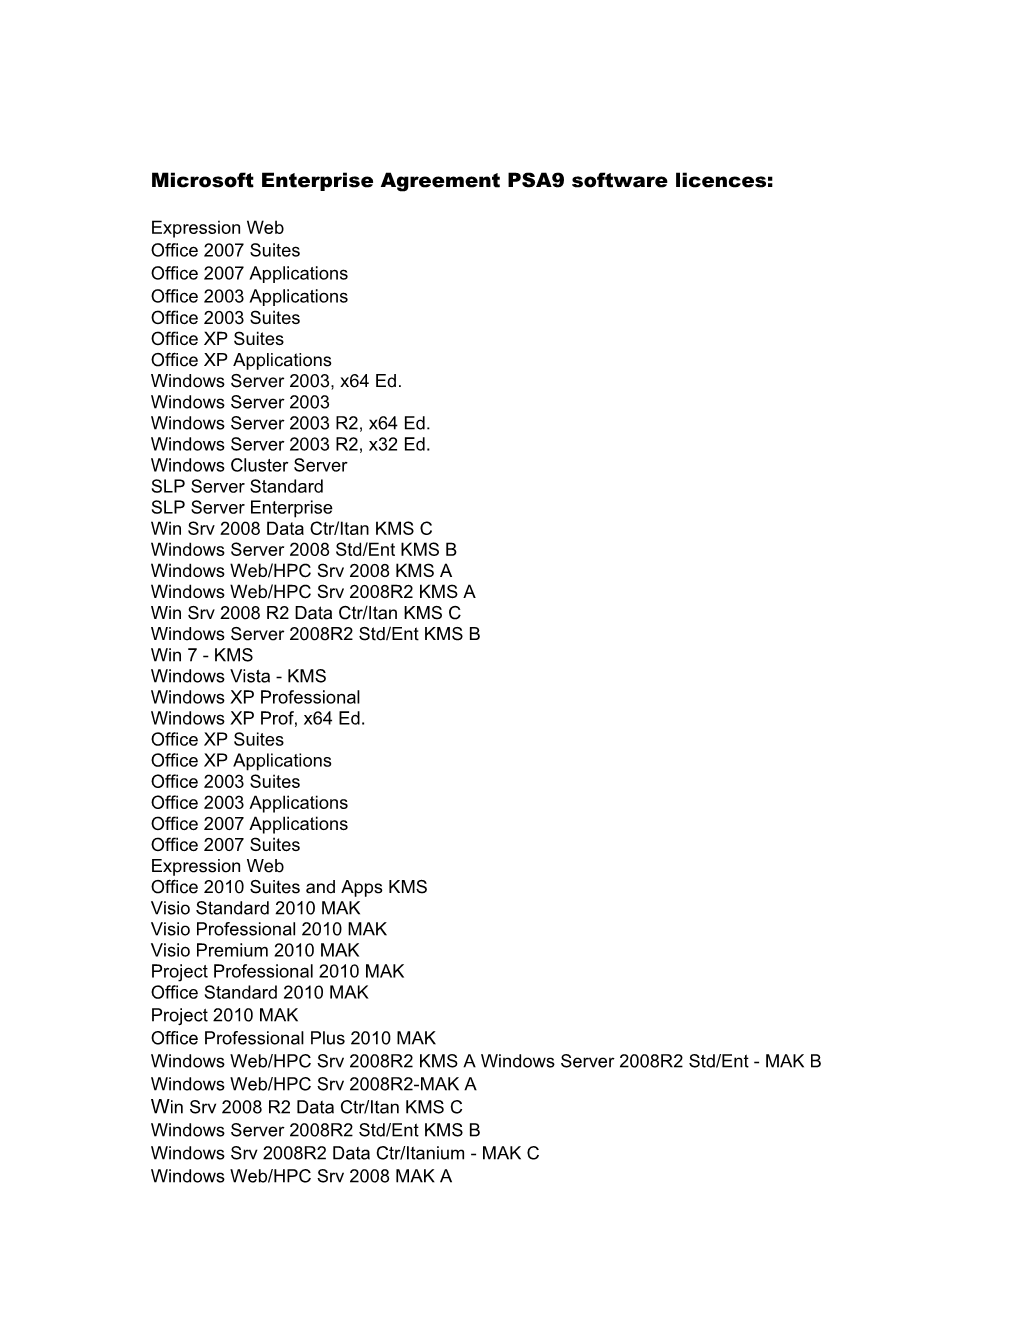 Microsoft Enterprise Agreement PSA9 Software Licences